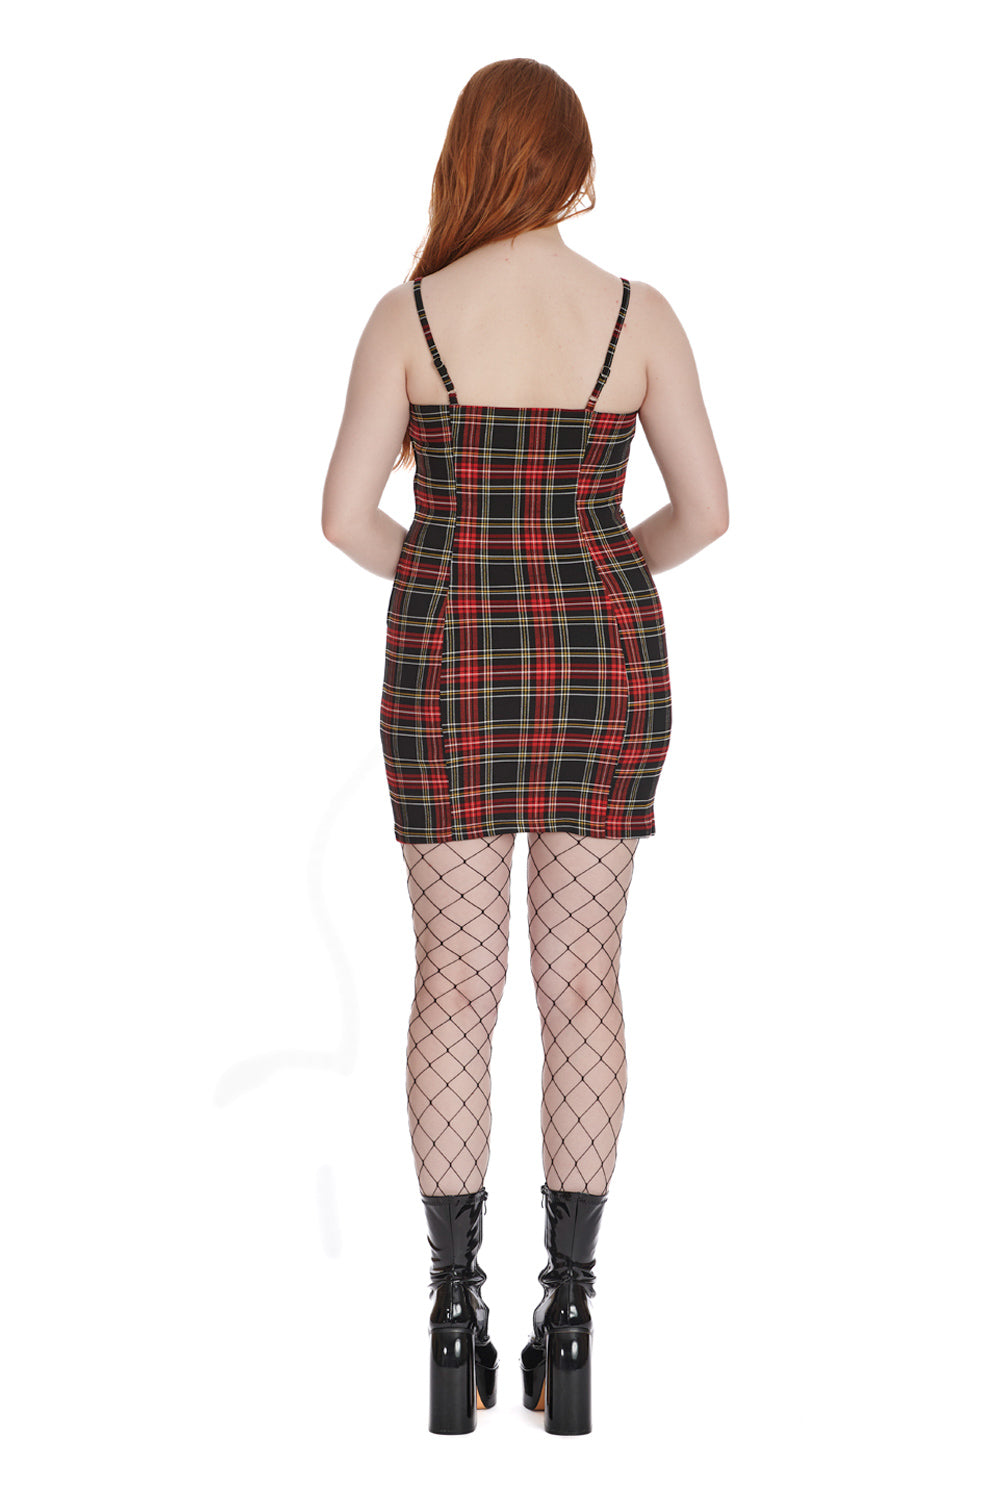 Banned Apparel Duncan Mini Dress | Red / Black